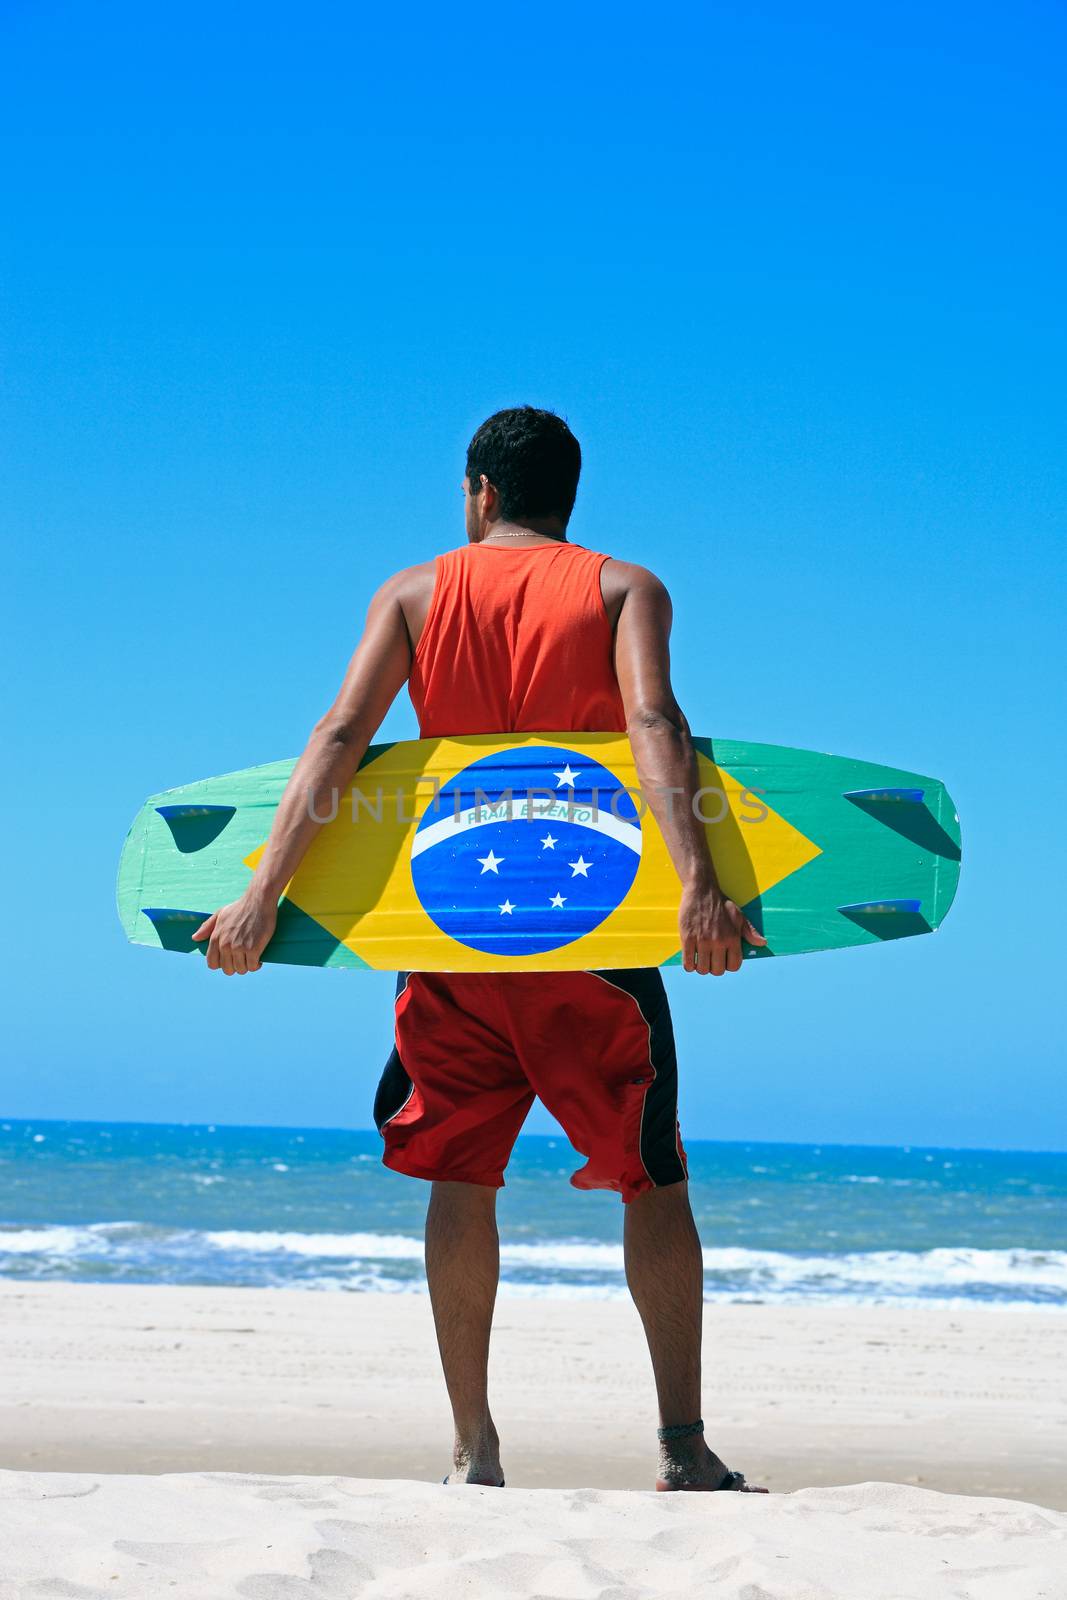 Kite surfer with the Brazilian flag painted on the board with "praia e vento" (beach and wind) instead of "ordem e progresso" in prainha beach near fortaleza